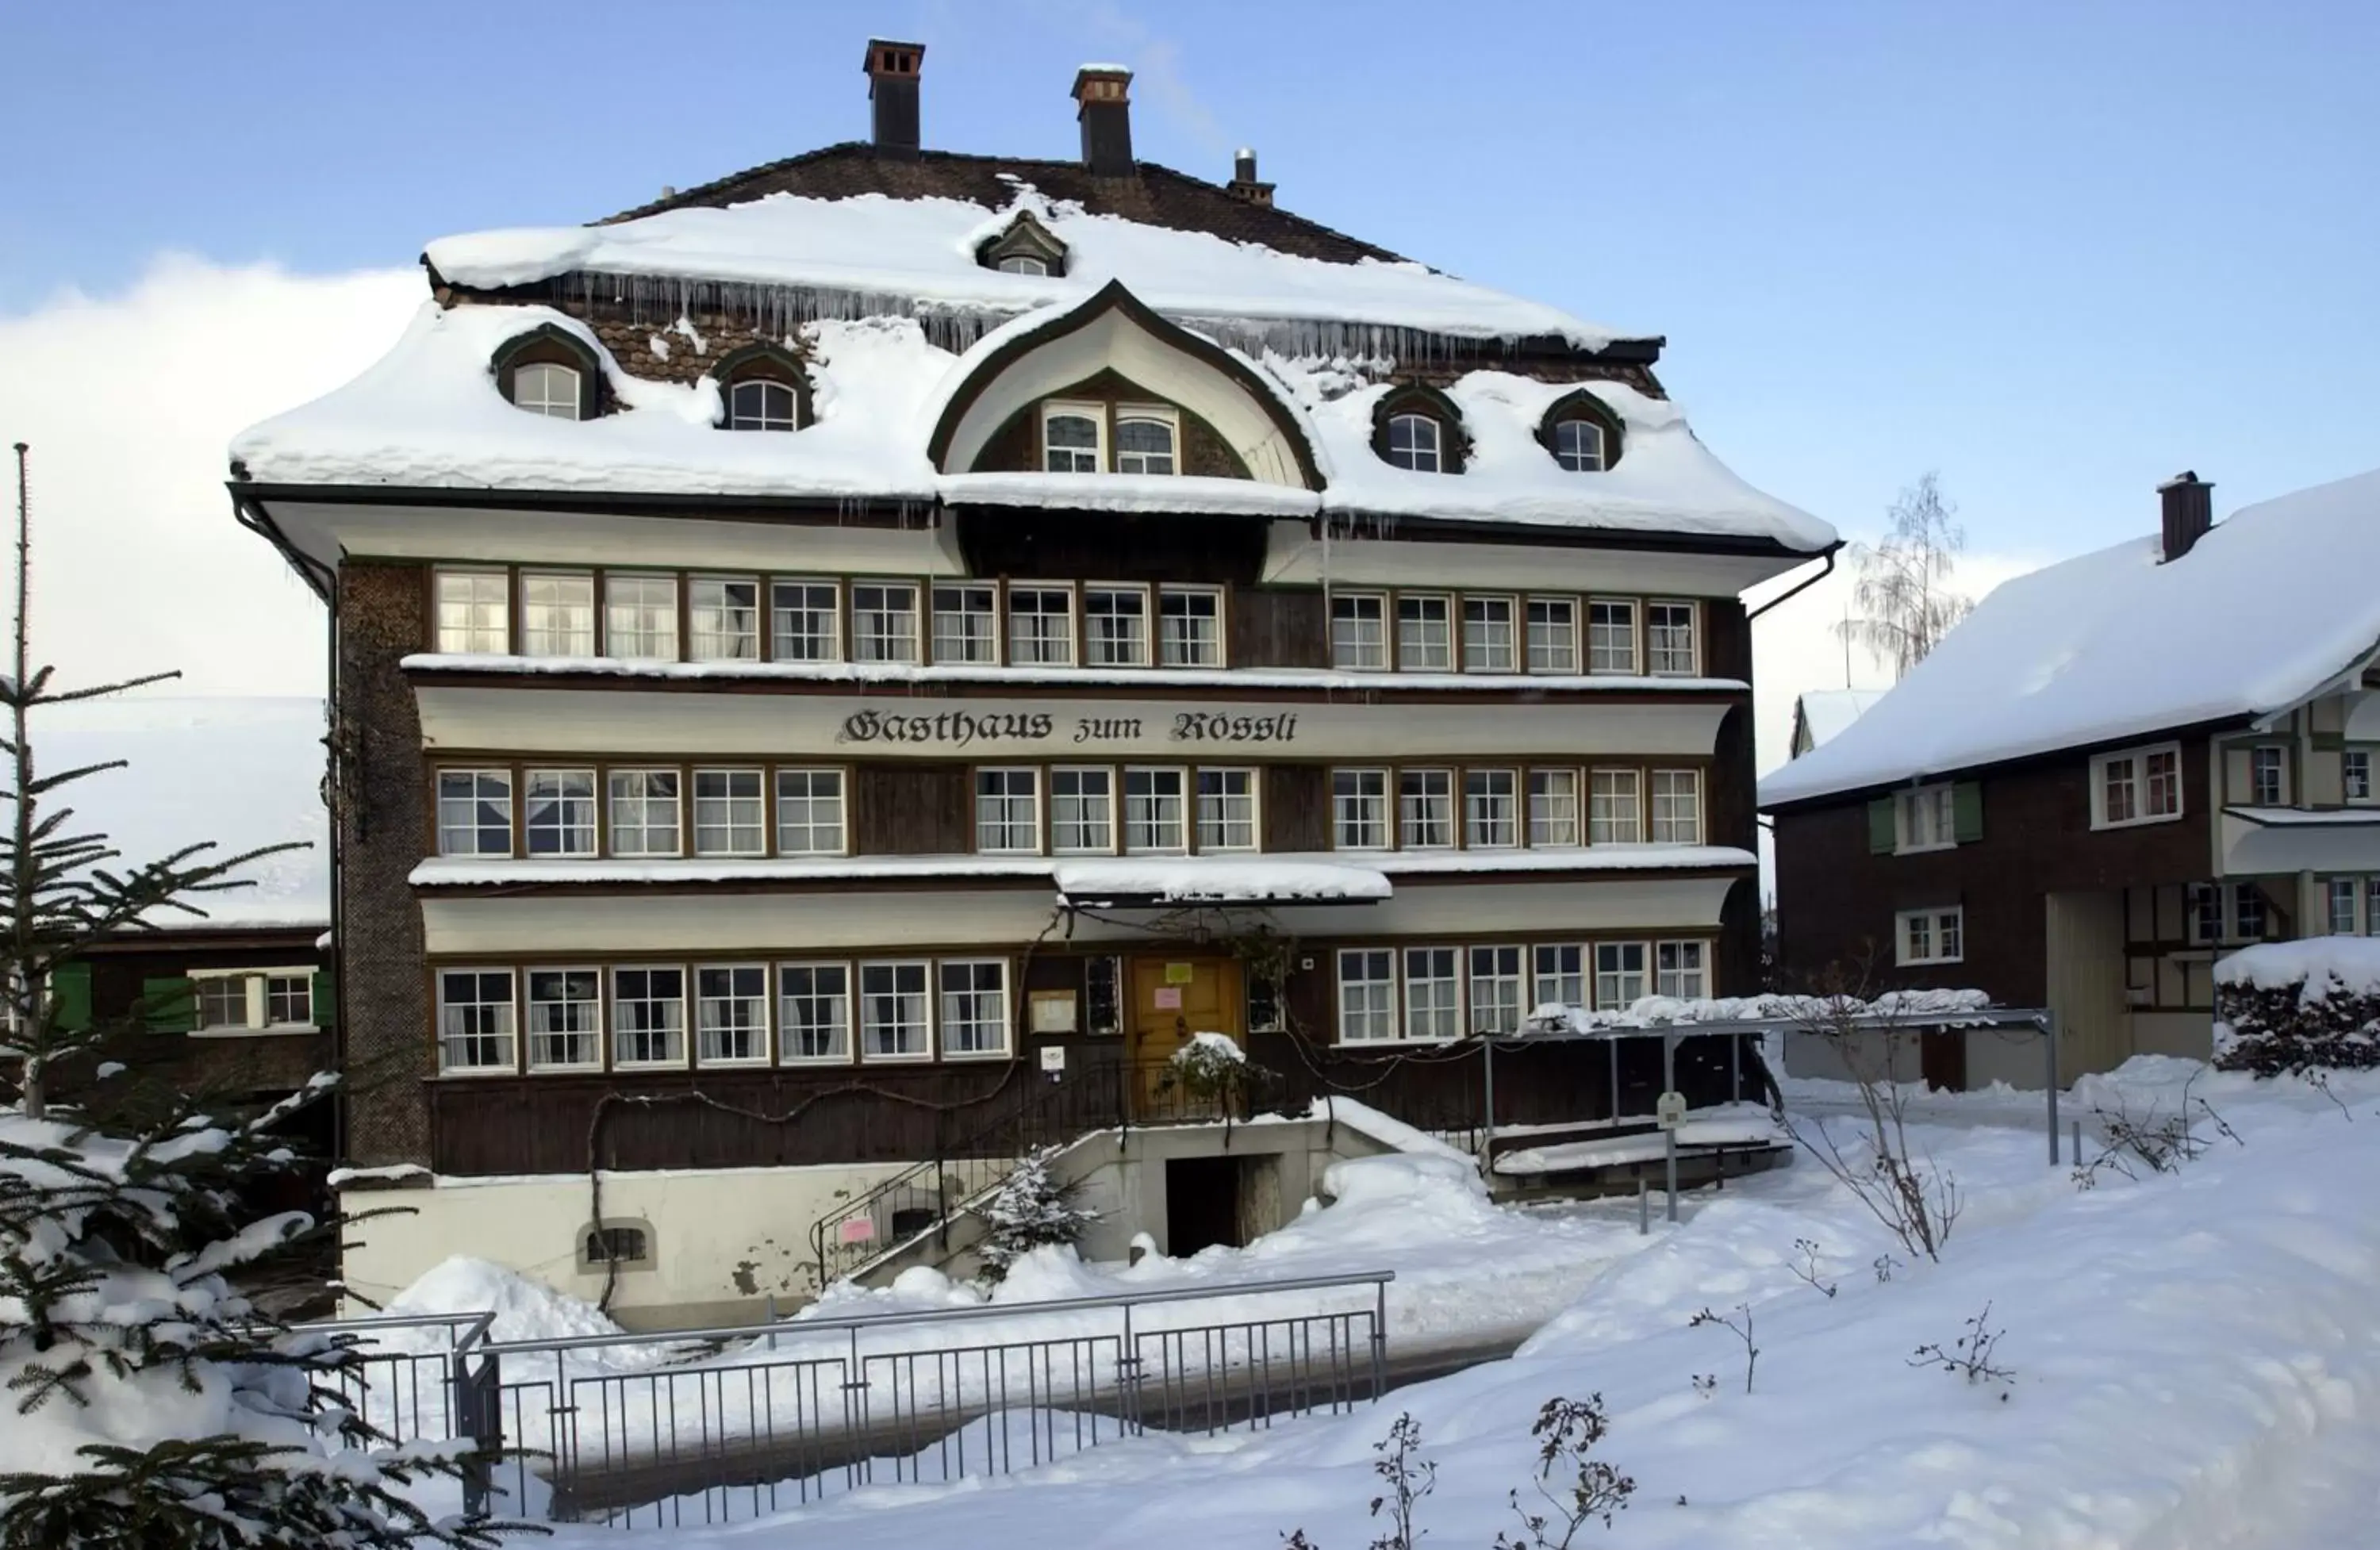 Property building, Winter in Gasthaus Rössli